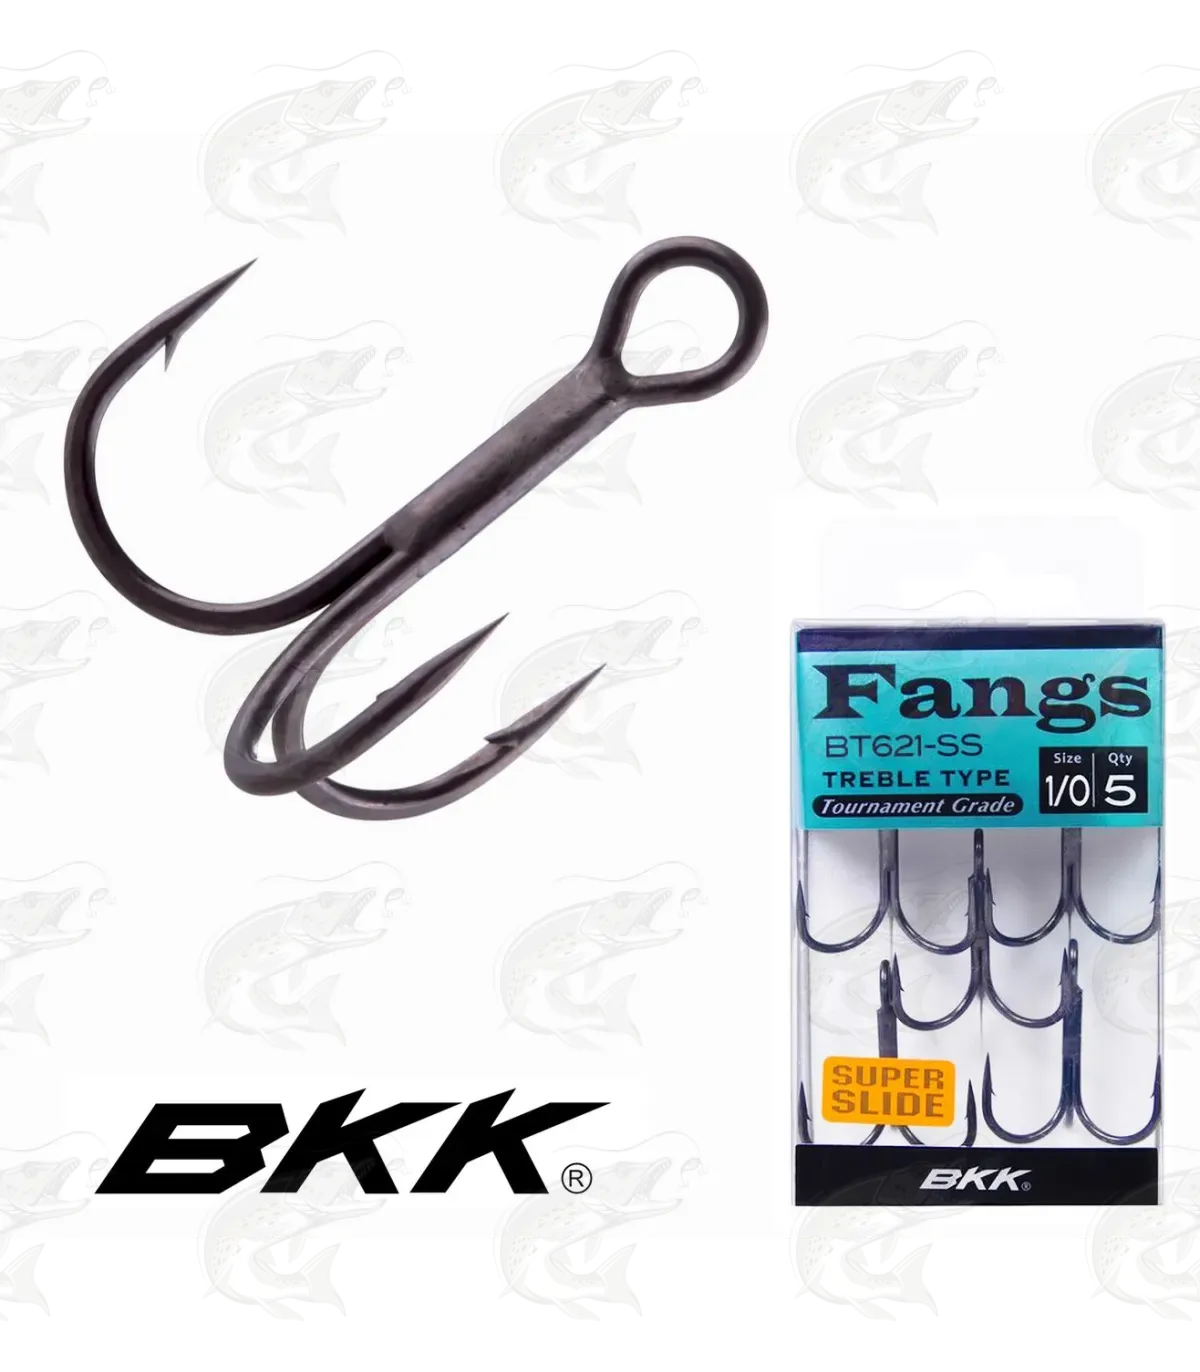 BKK Spear-21 SS Treble Hooks - Size 1/0 - Super Slide Carbon Steel Hook